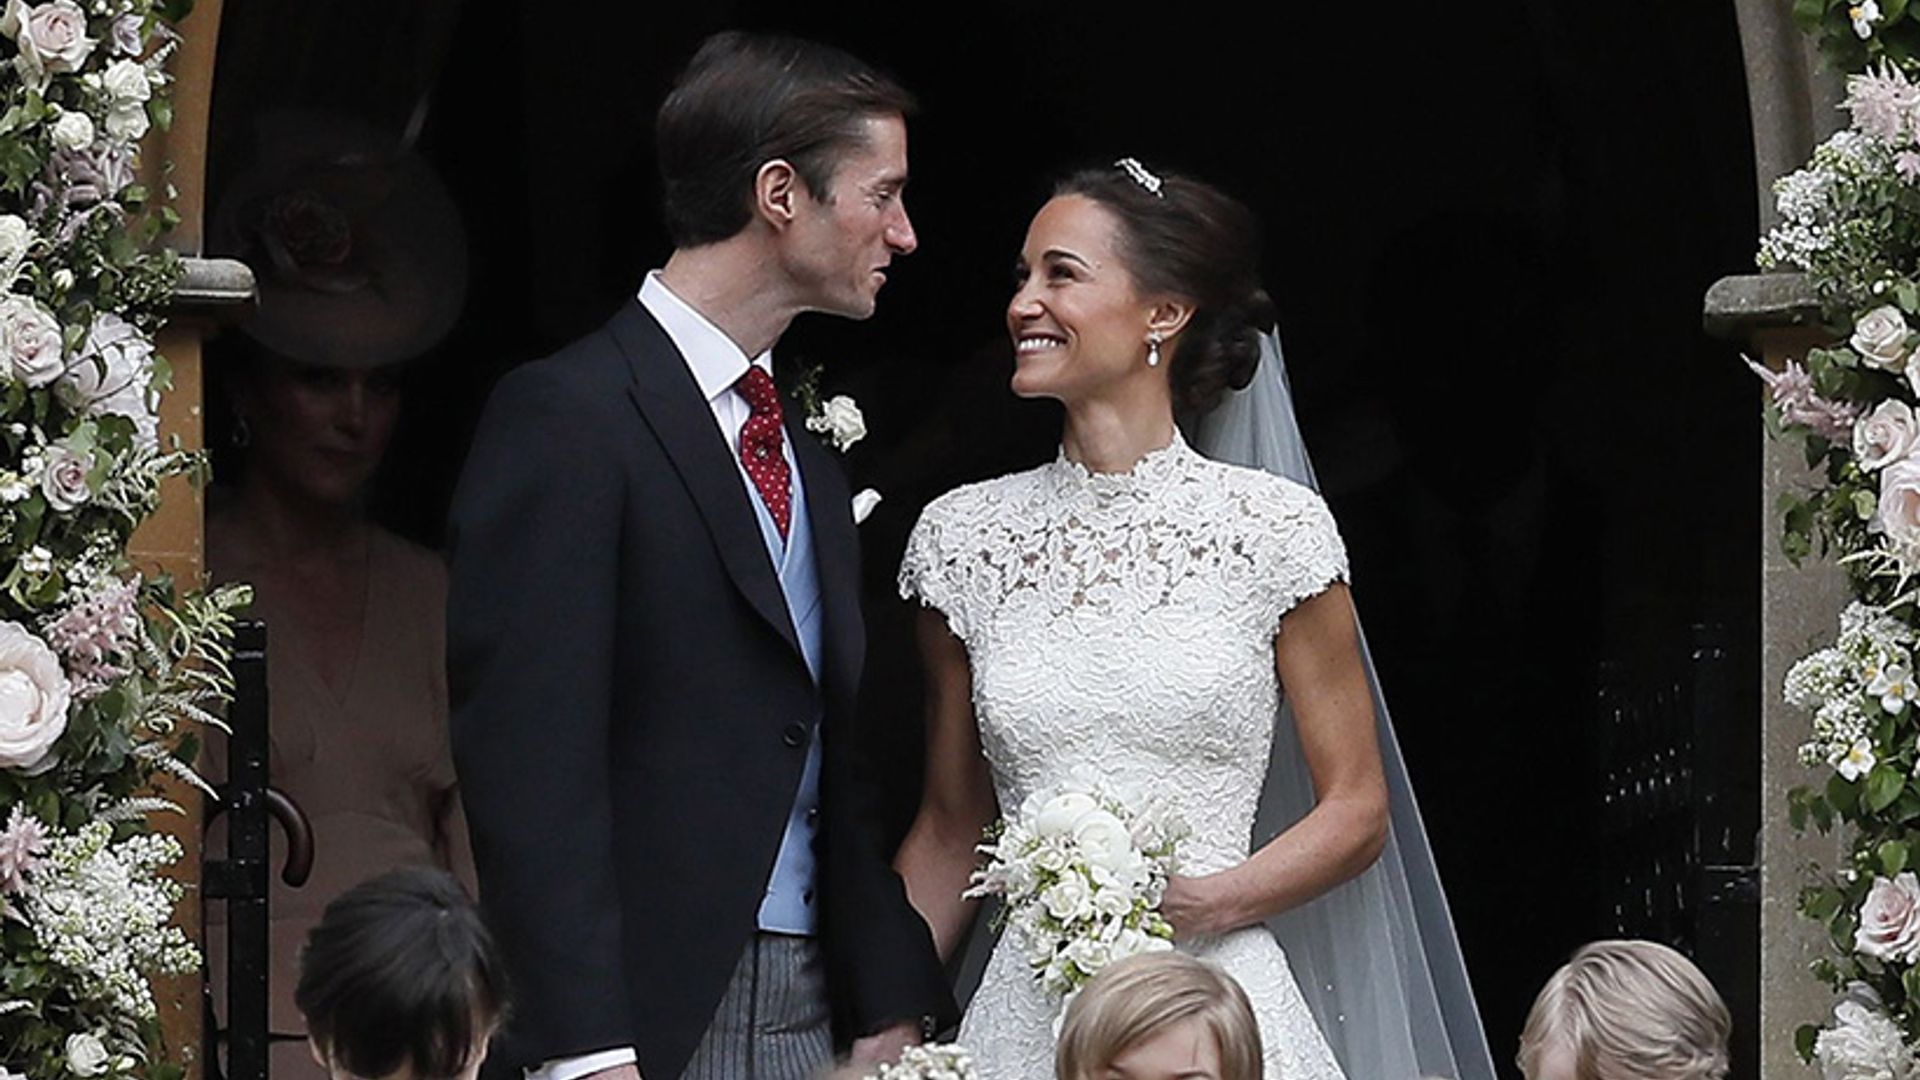 Newlyweds Pippa Middleton and James Matthews celebrate with a kiss